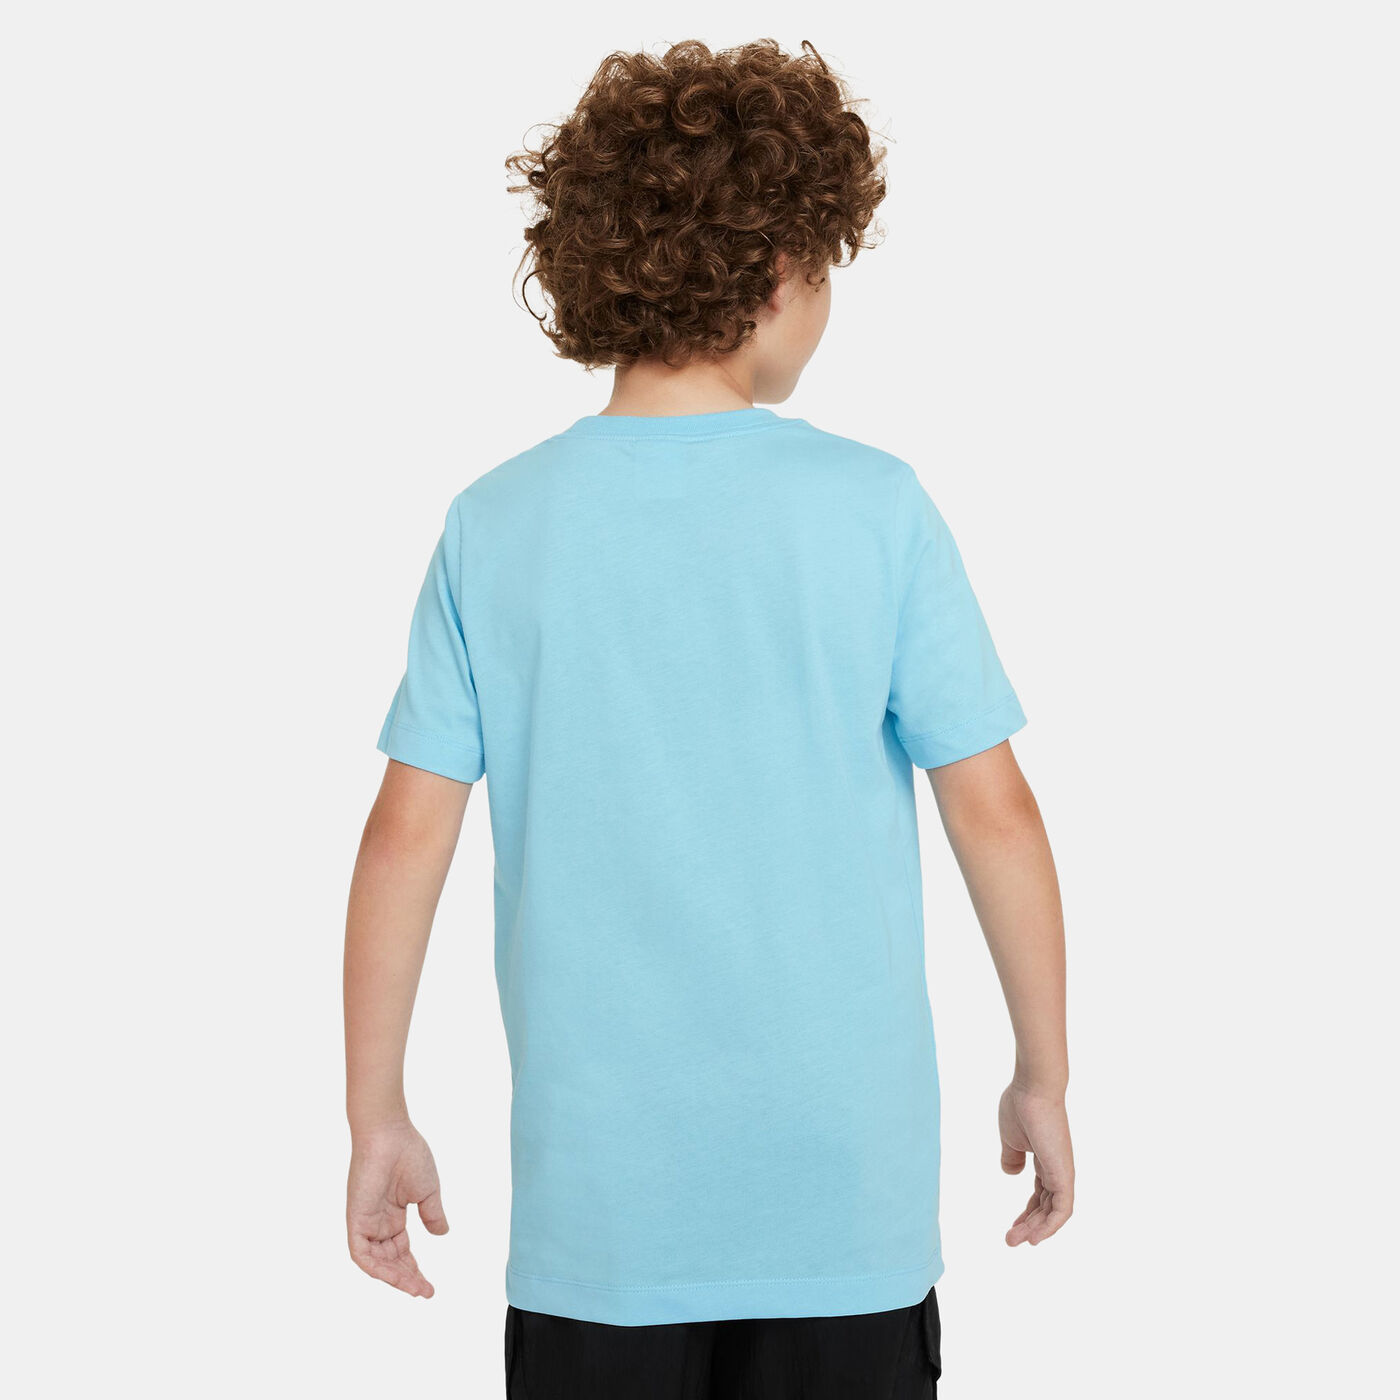 Kids' Sportswear Graphic T-Shirt (Older Kids)